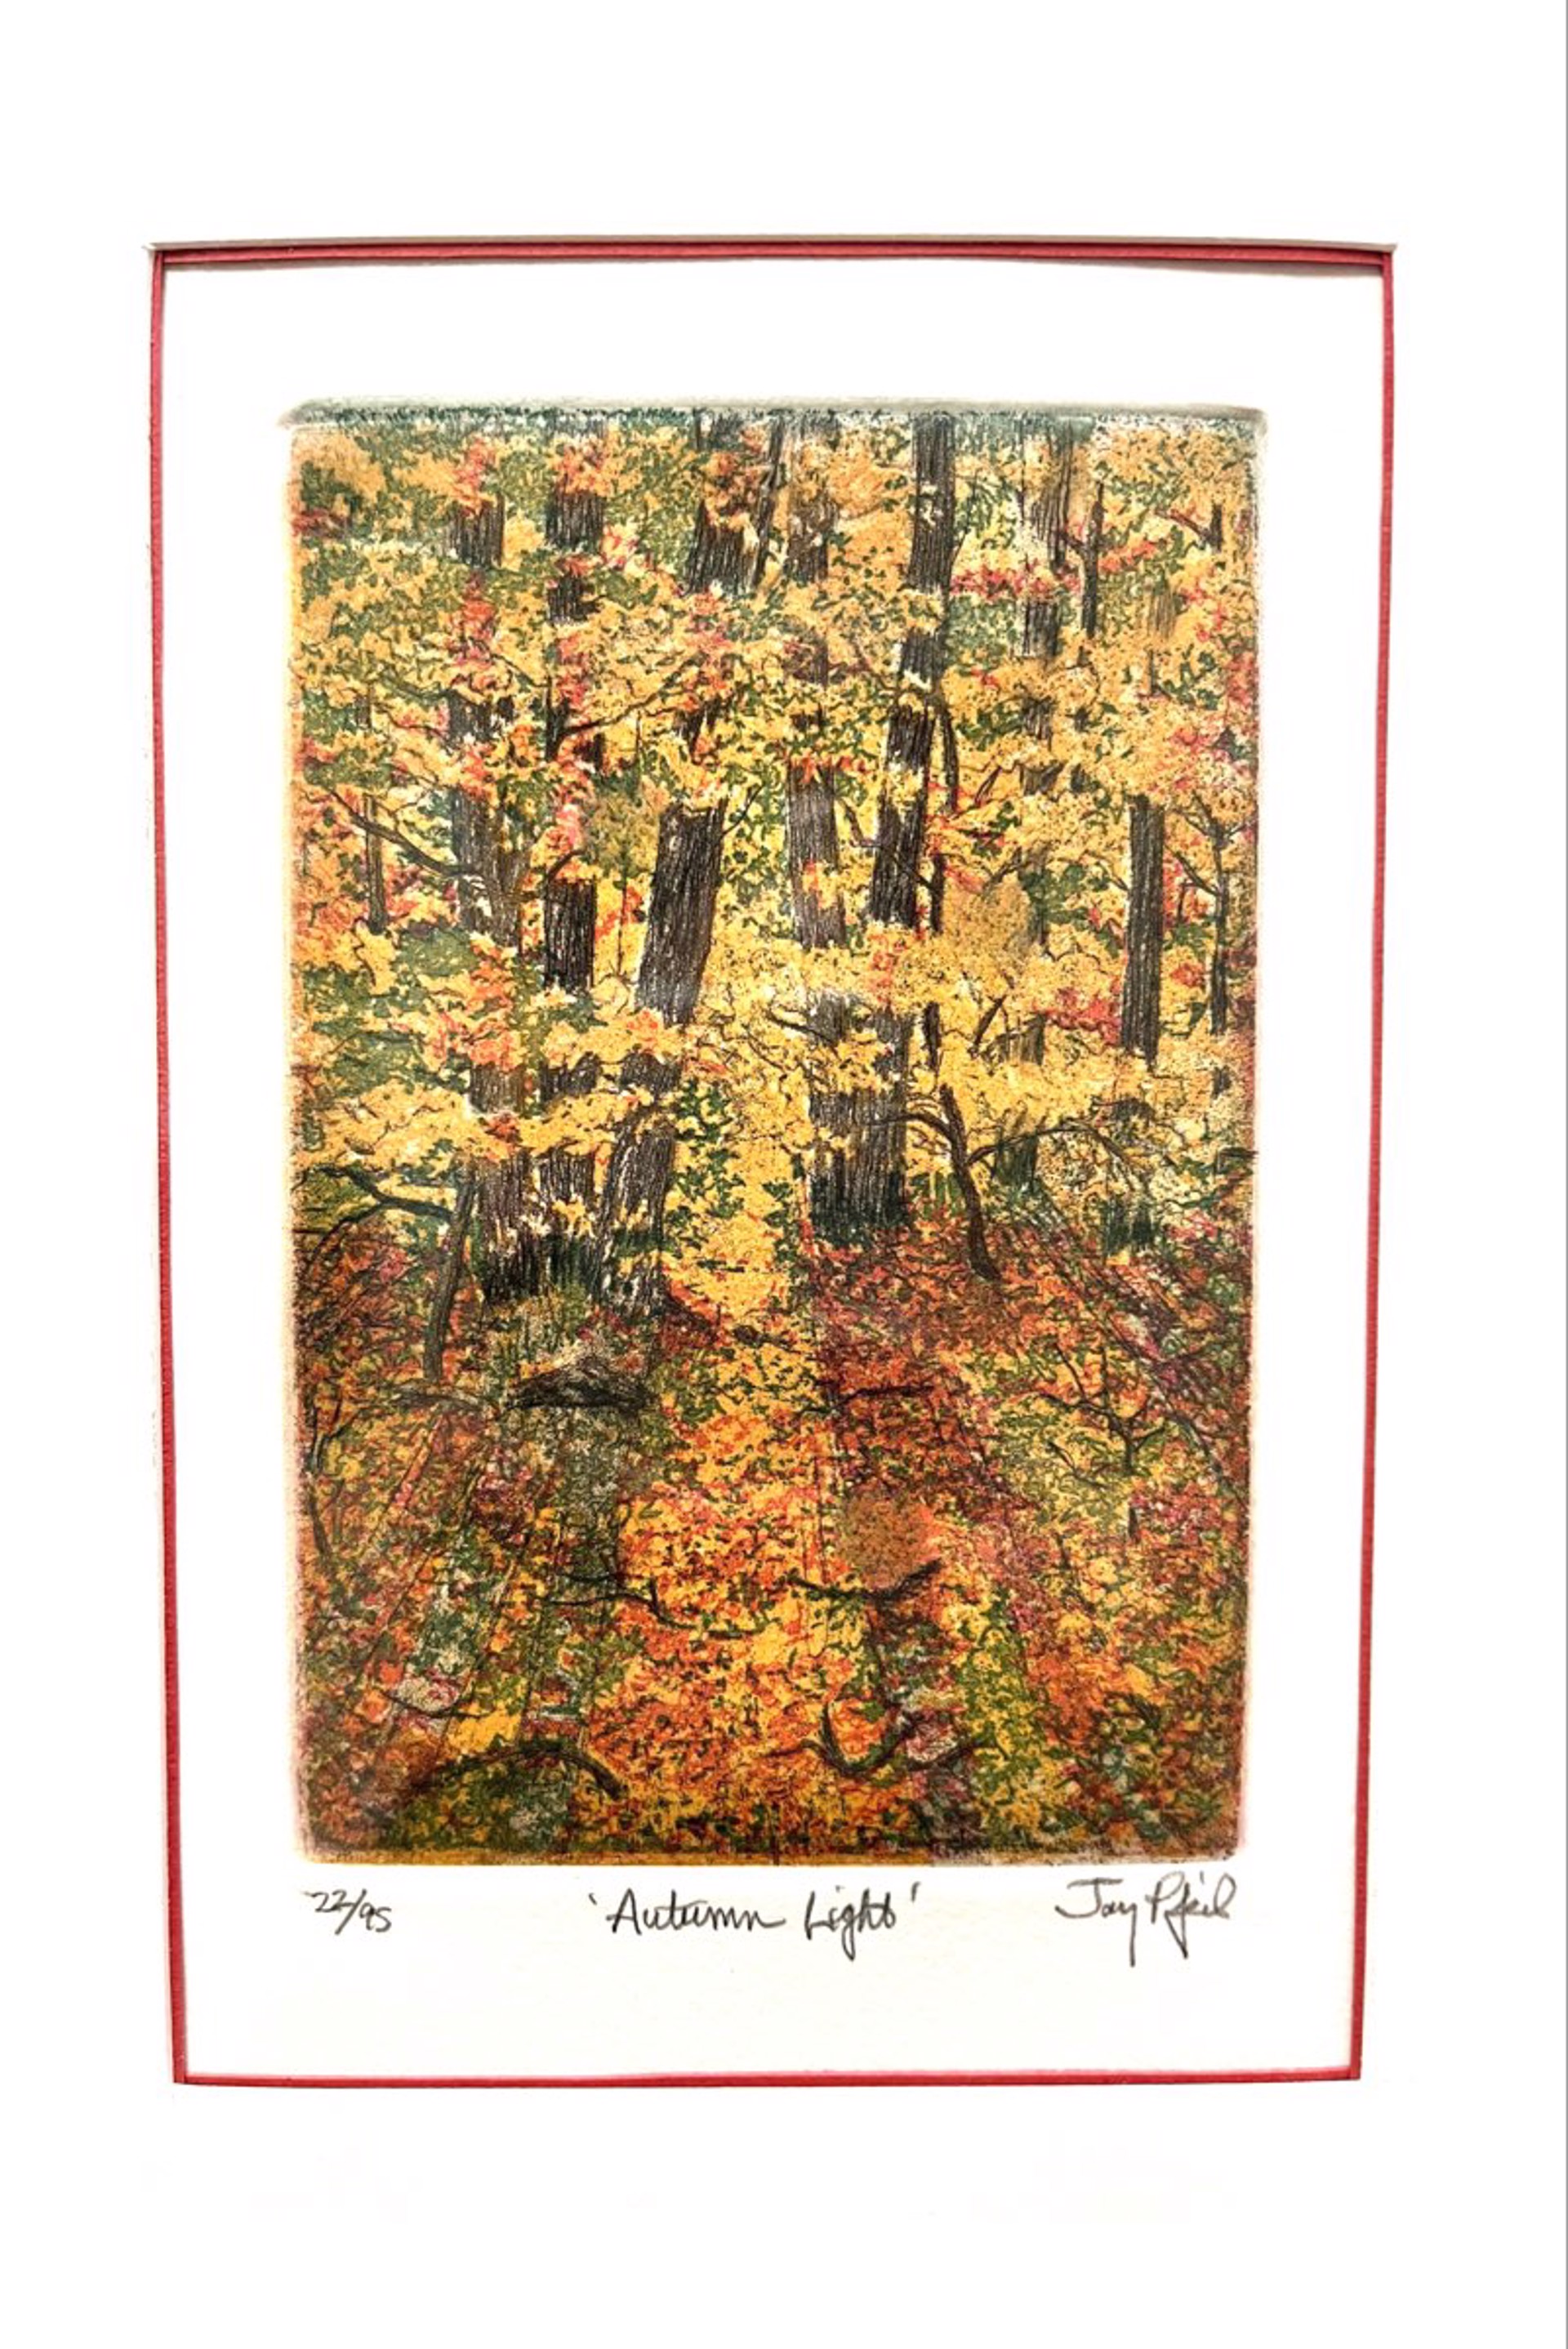 Autumn Light (22/95) by Jay Pfeil